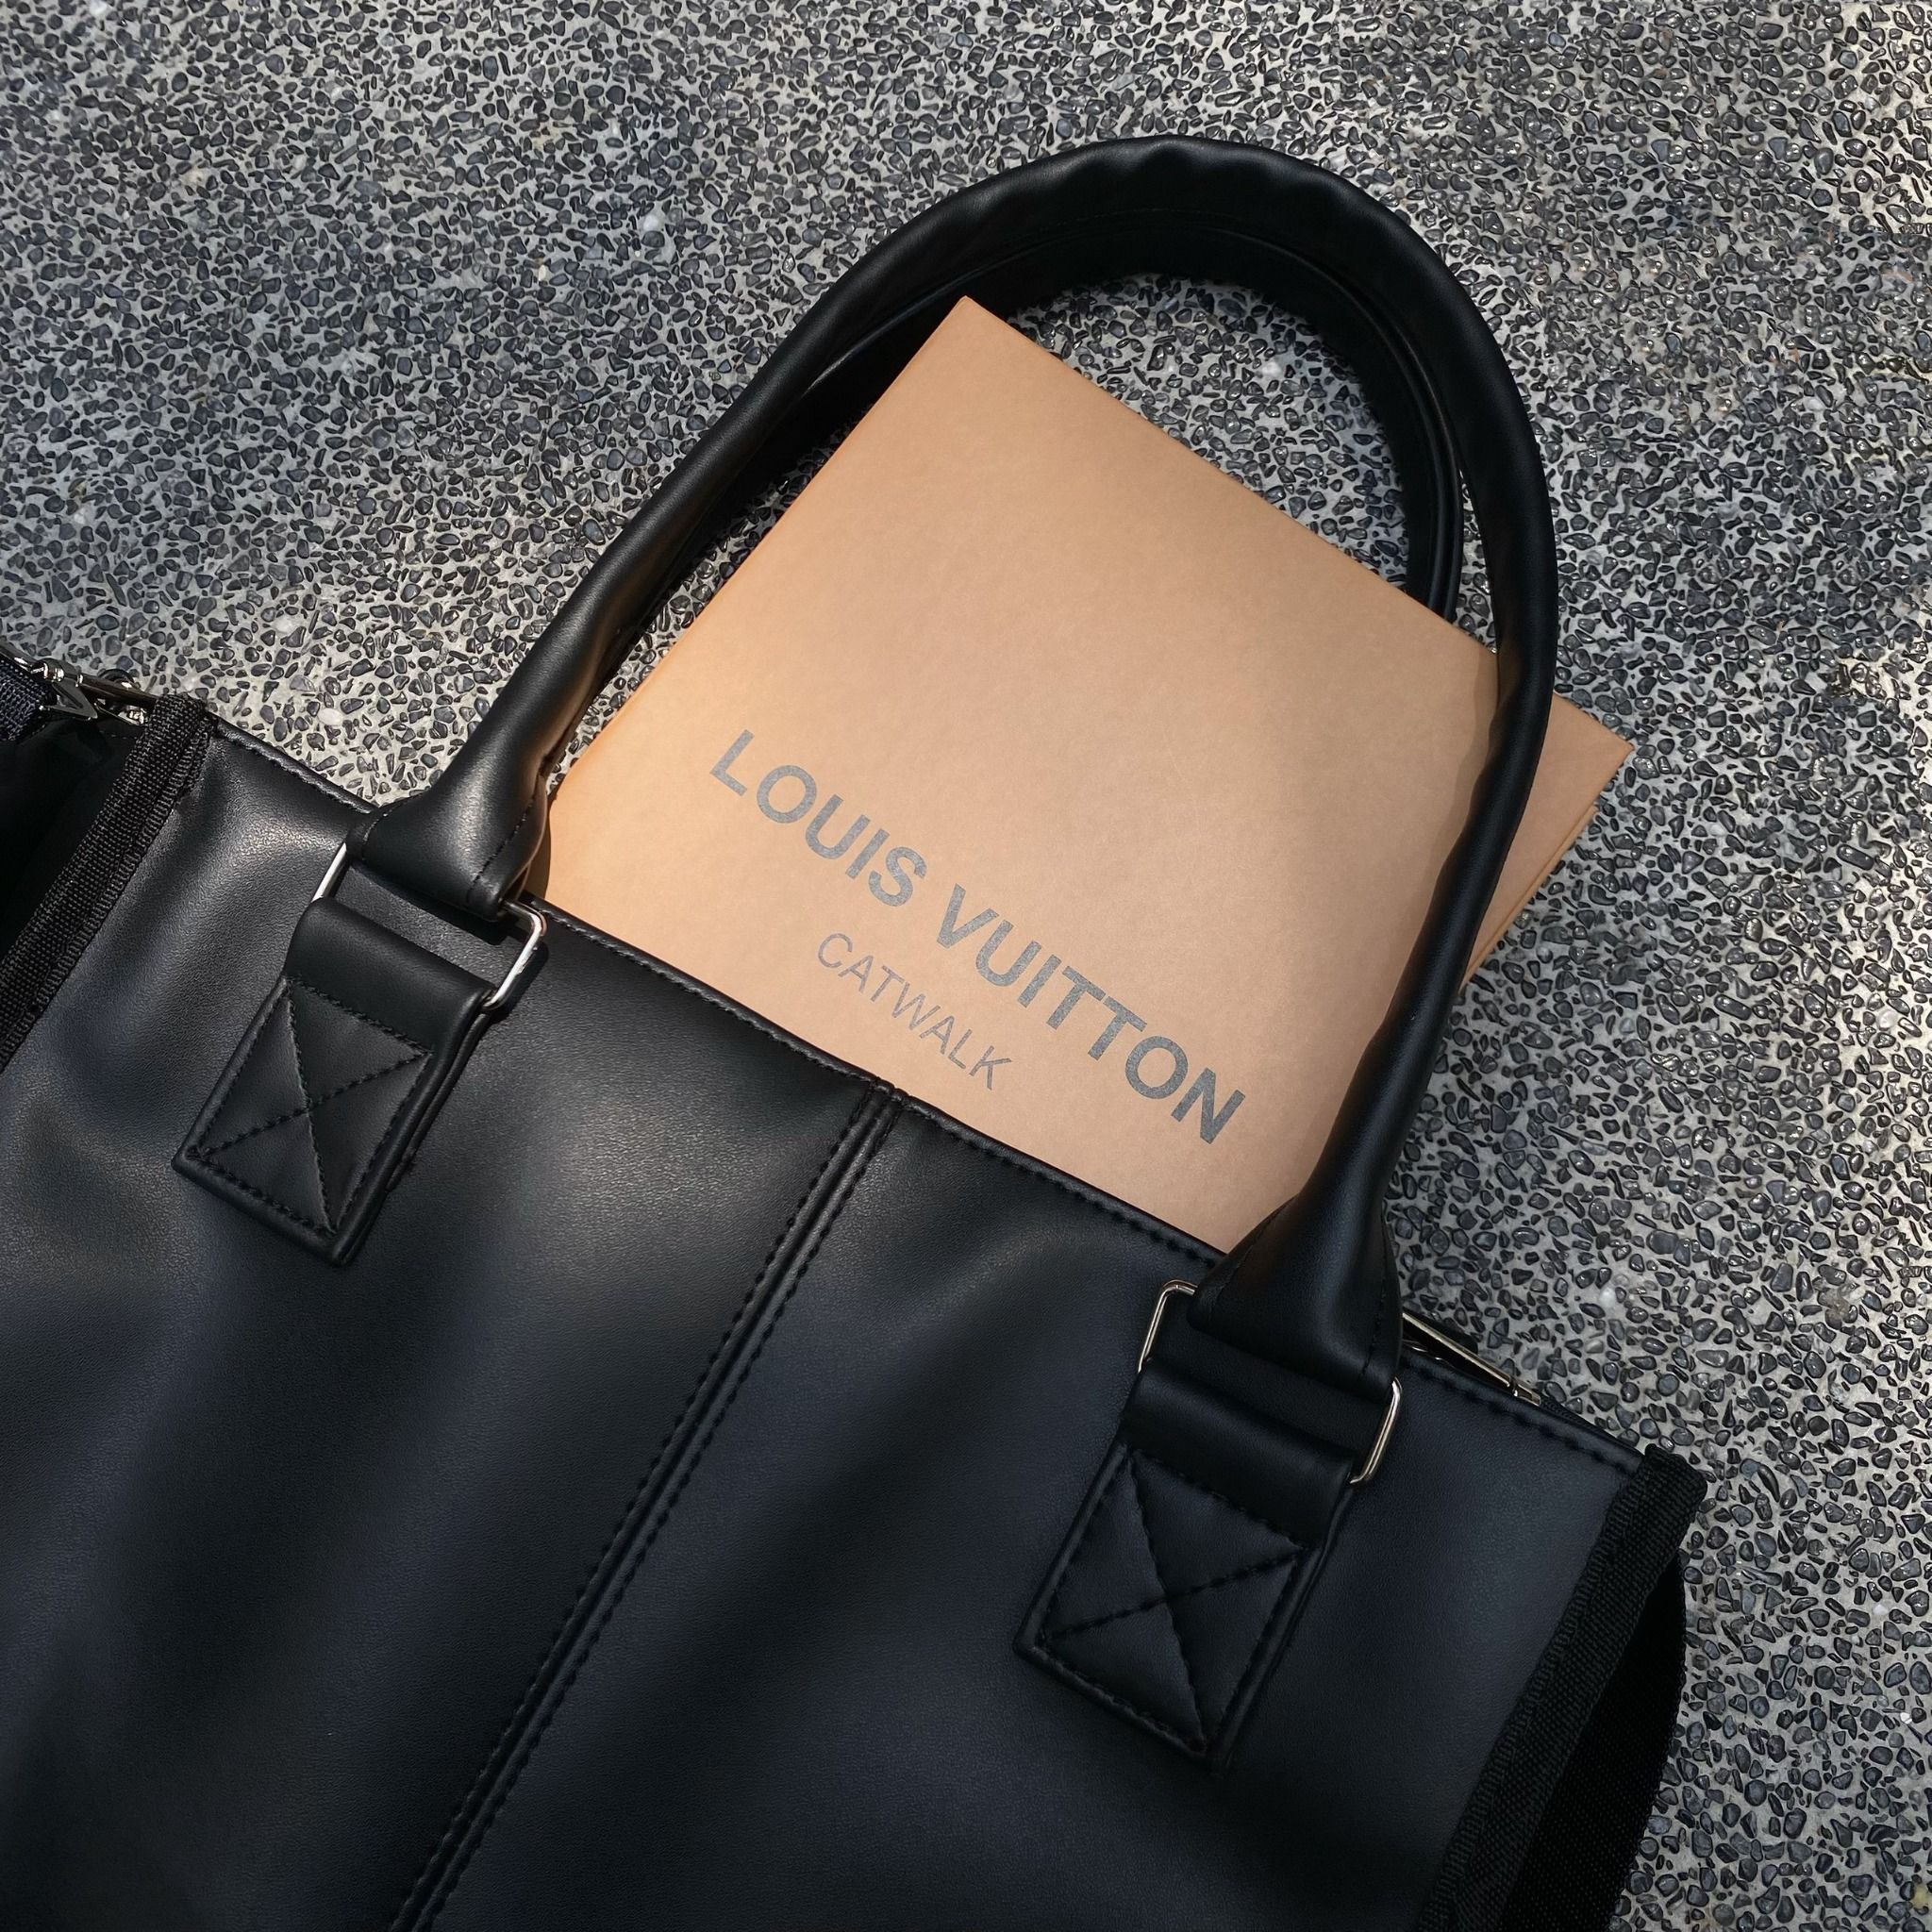 Louis Vuitton Tote Black Bags  Handbags for Women  Authenticity  Guaranteed  eBay